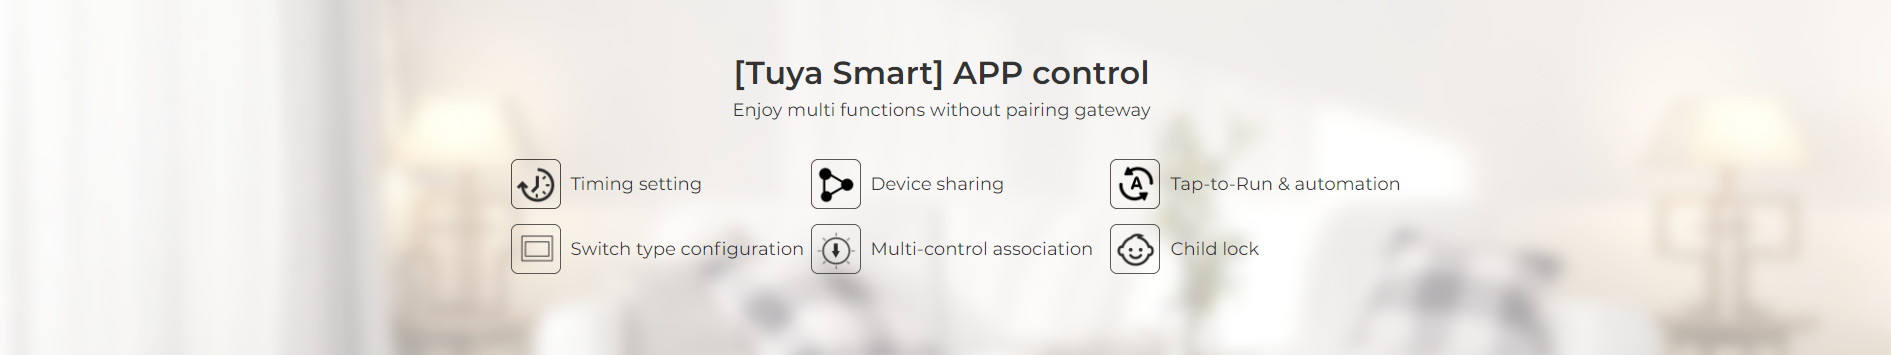 [Tuya Smart] APP control Enjoy multi functions without pairing gateway